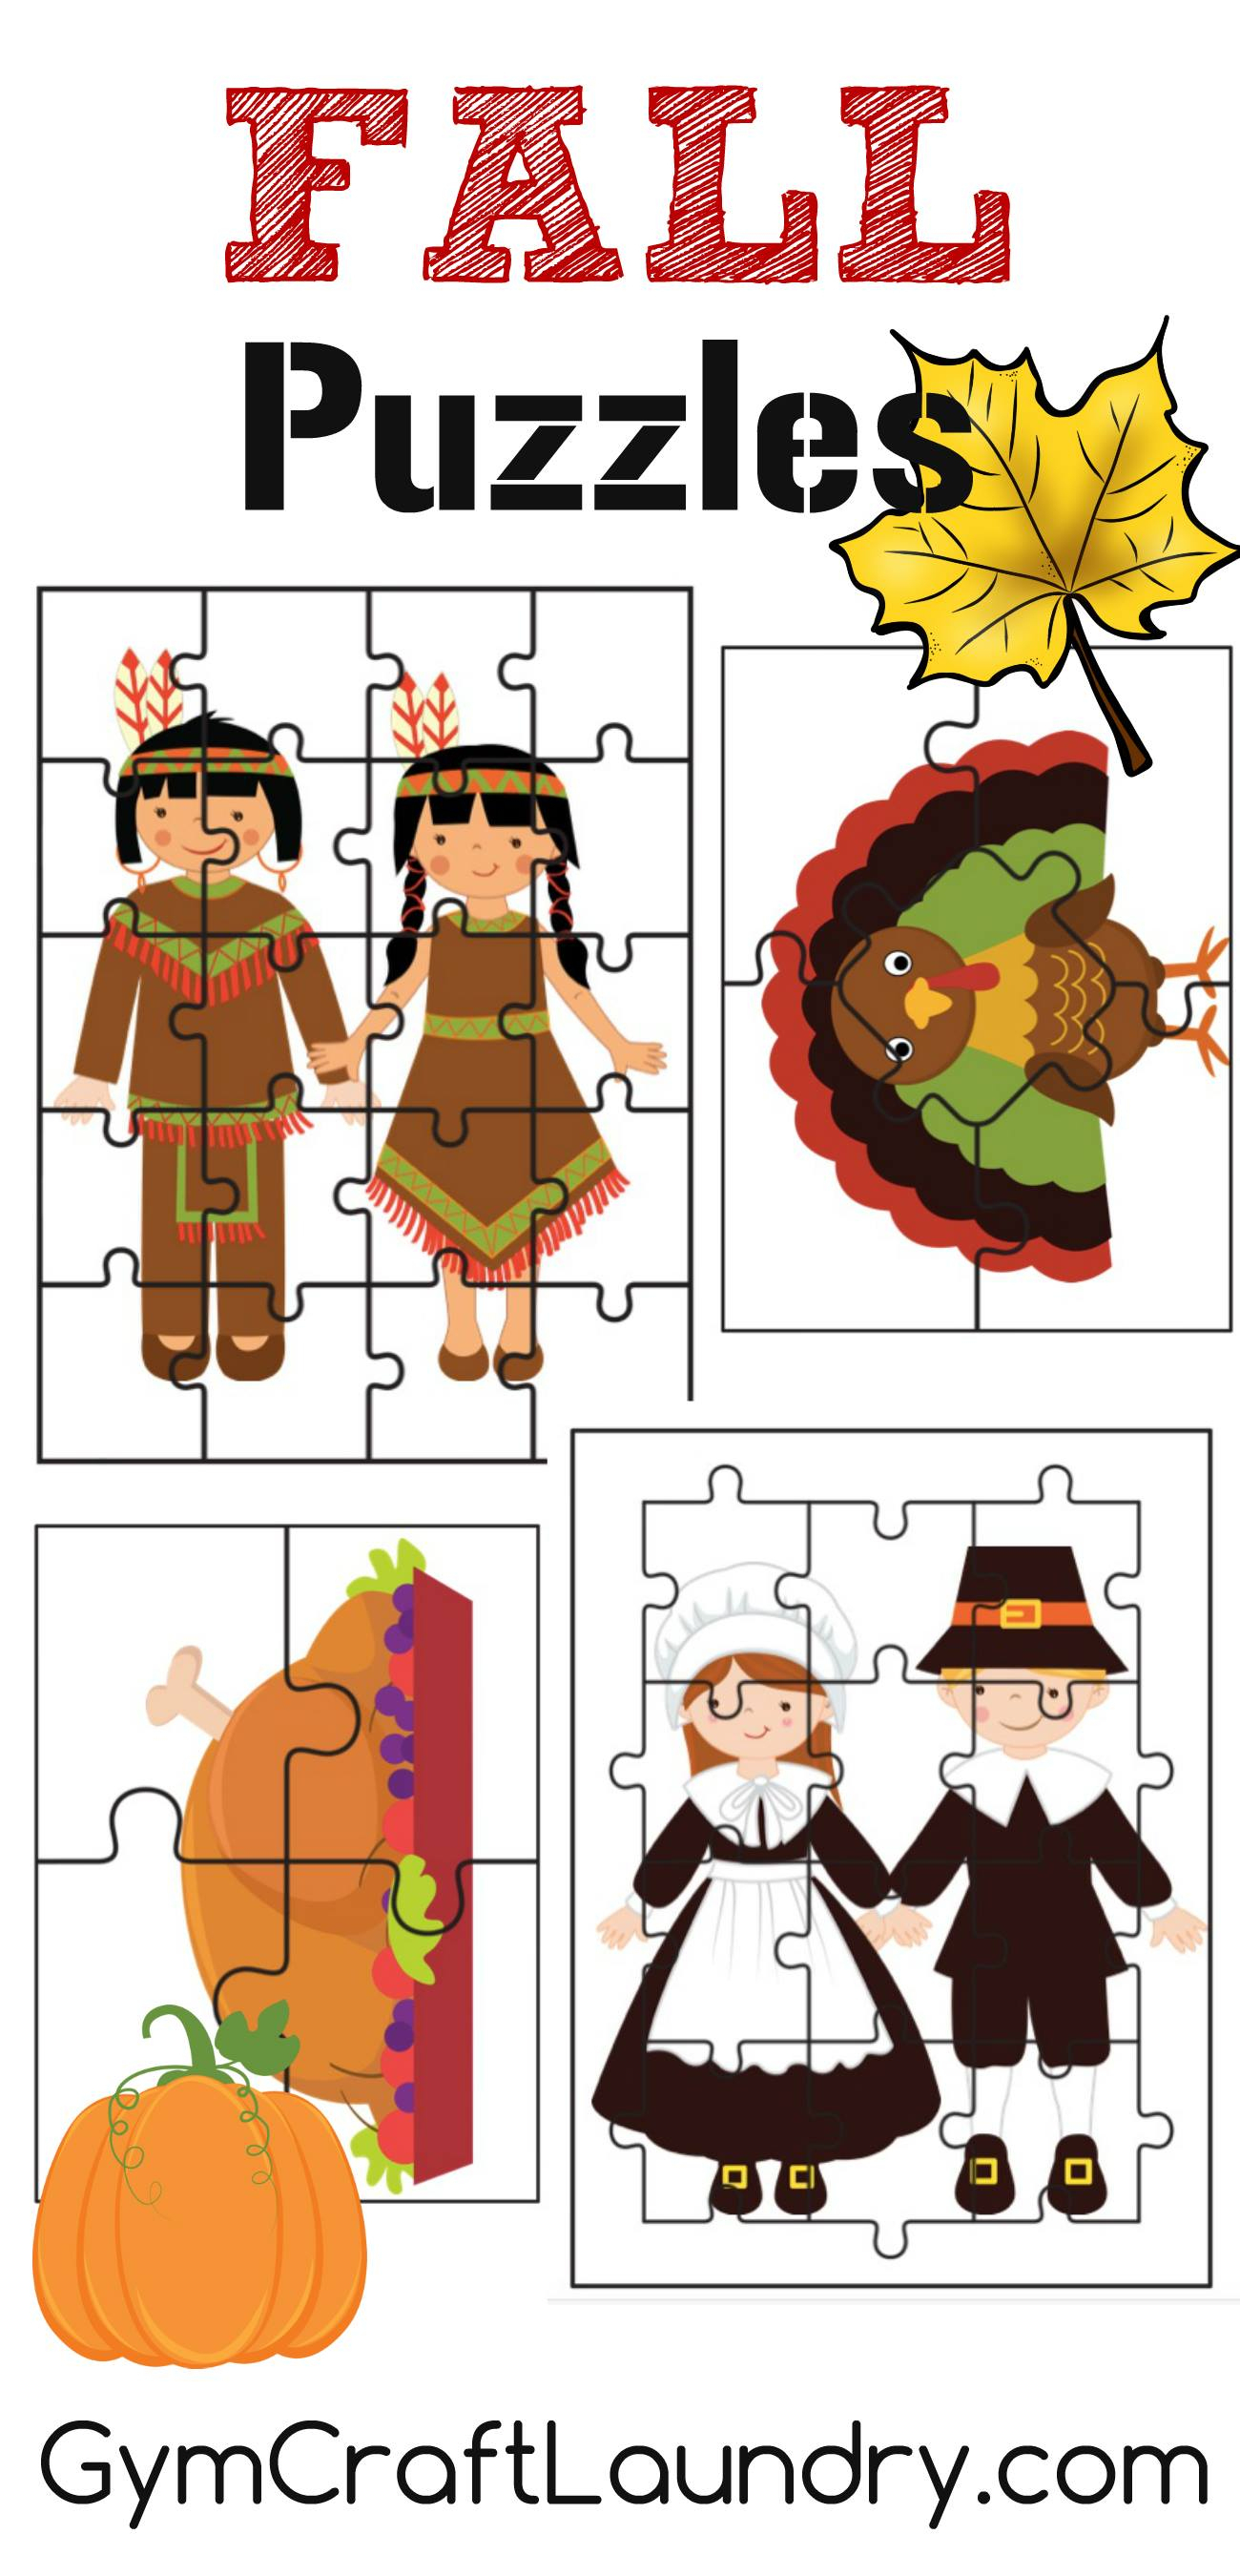 printable-puzzles-for-preschoolers-printable-crossword-puzzles